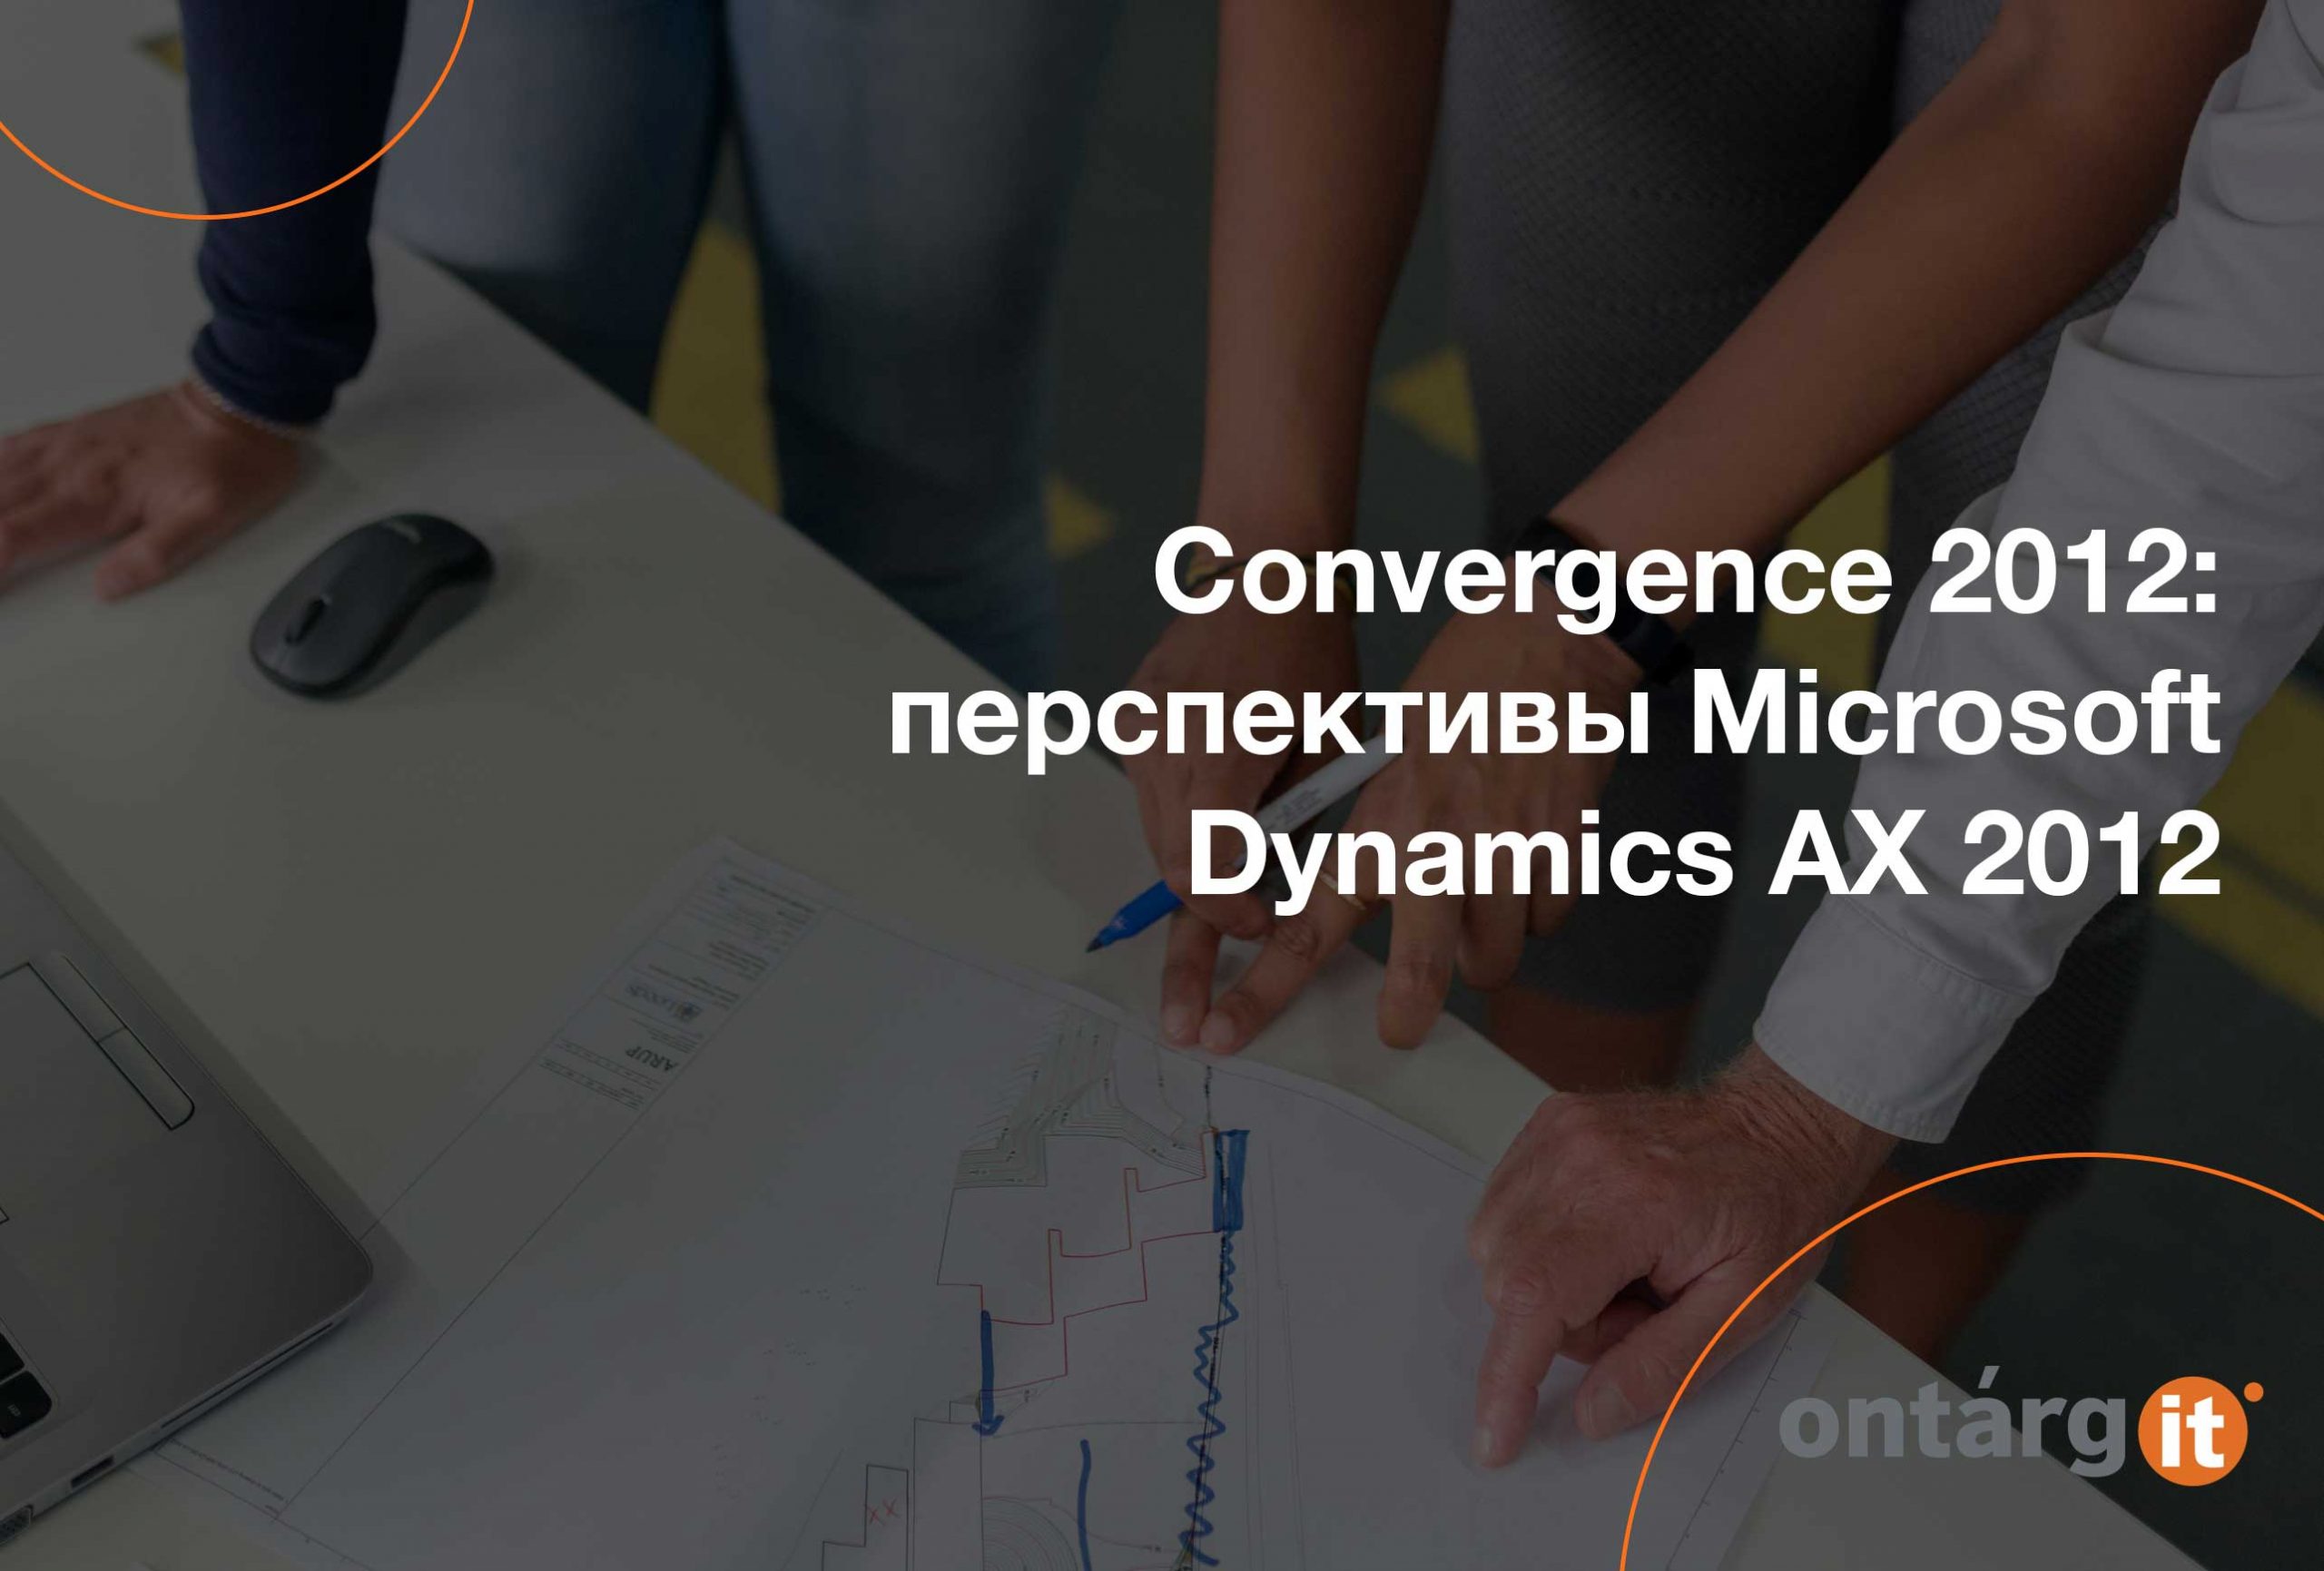 Convergence 2012: перспективы Microsoft Dynamics AX 2012